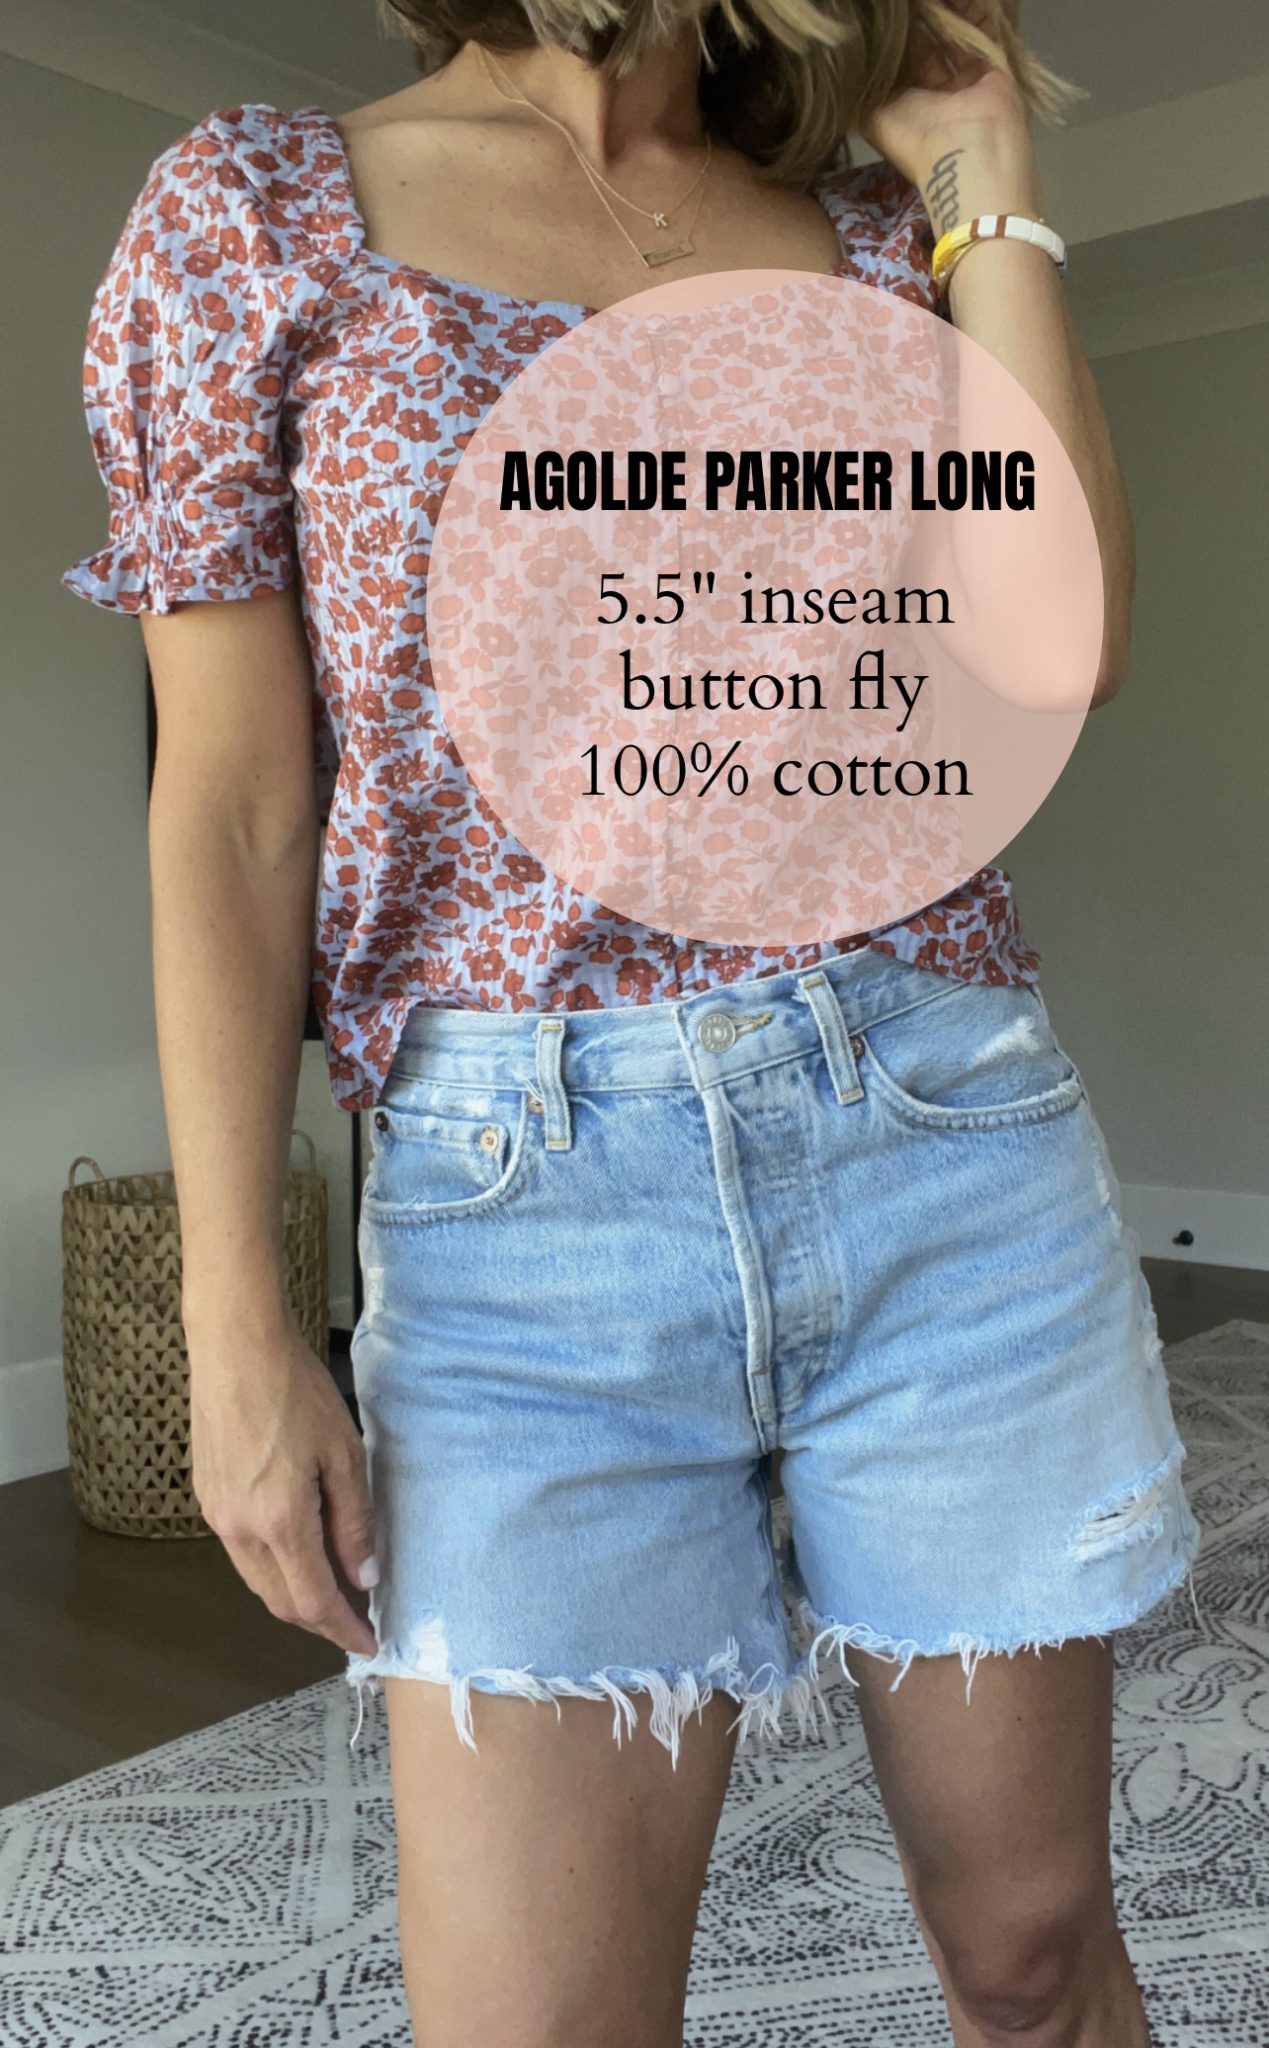 AGOLDE Parker Long 5.5" inseam button fly 100% cotton